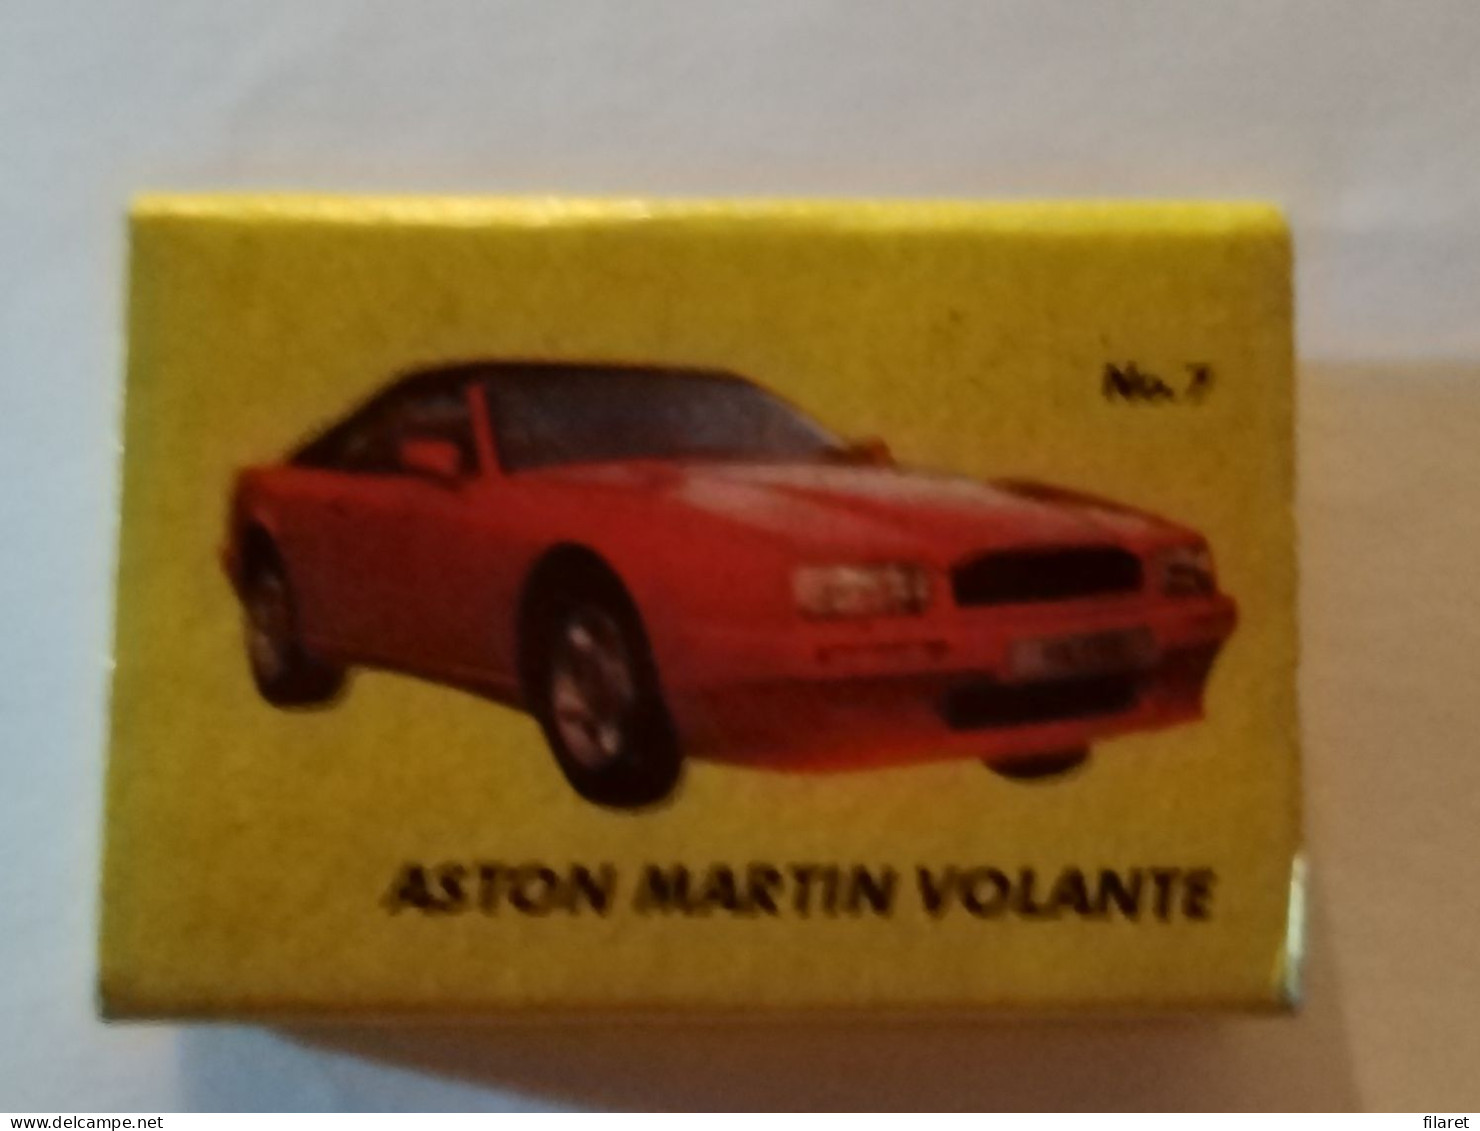 Aston Martin Volante, Car/automobile,MALAZLAR FACTORY,Turcia,matchbox - Matchboxes